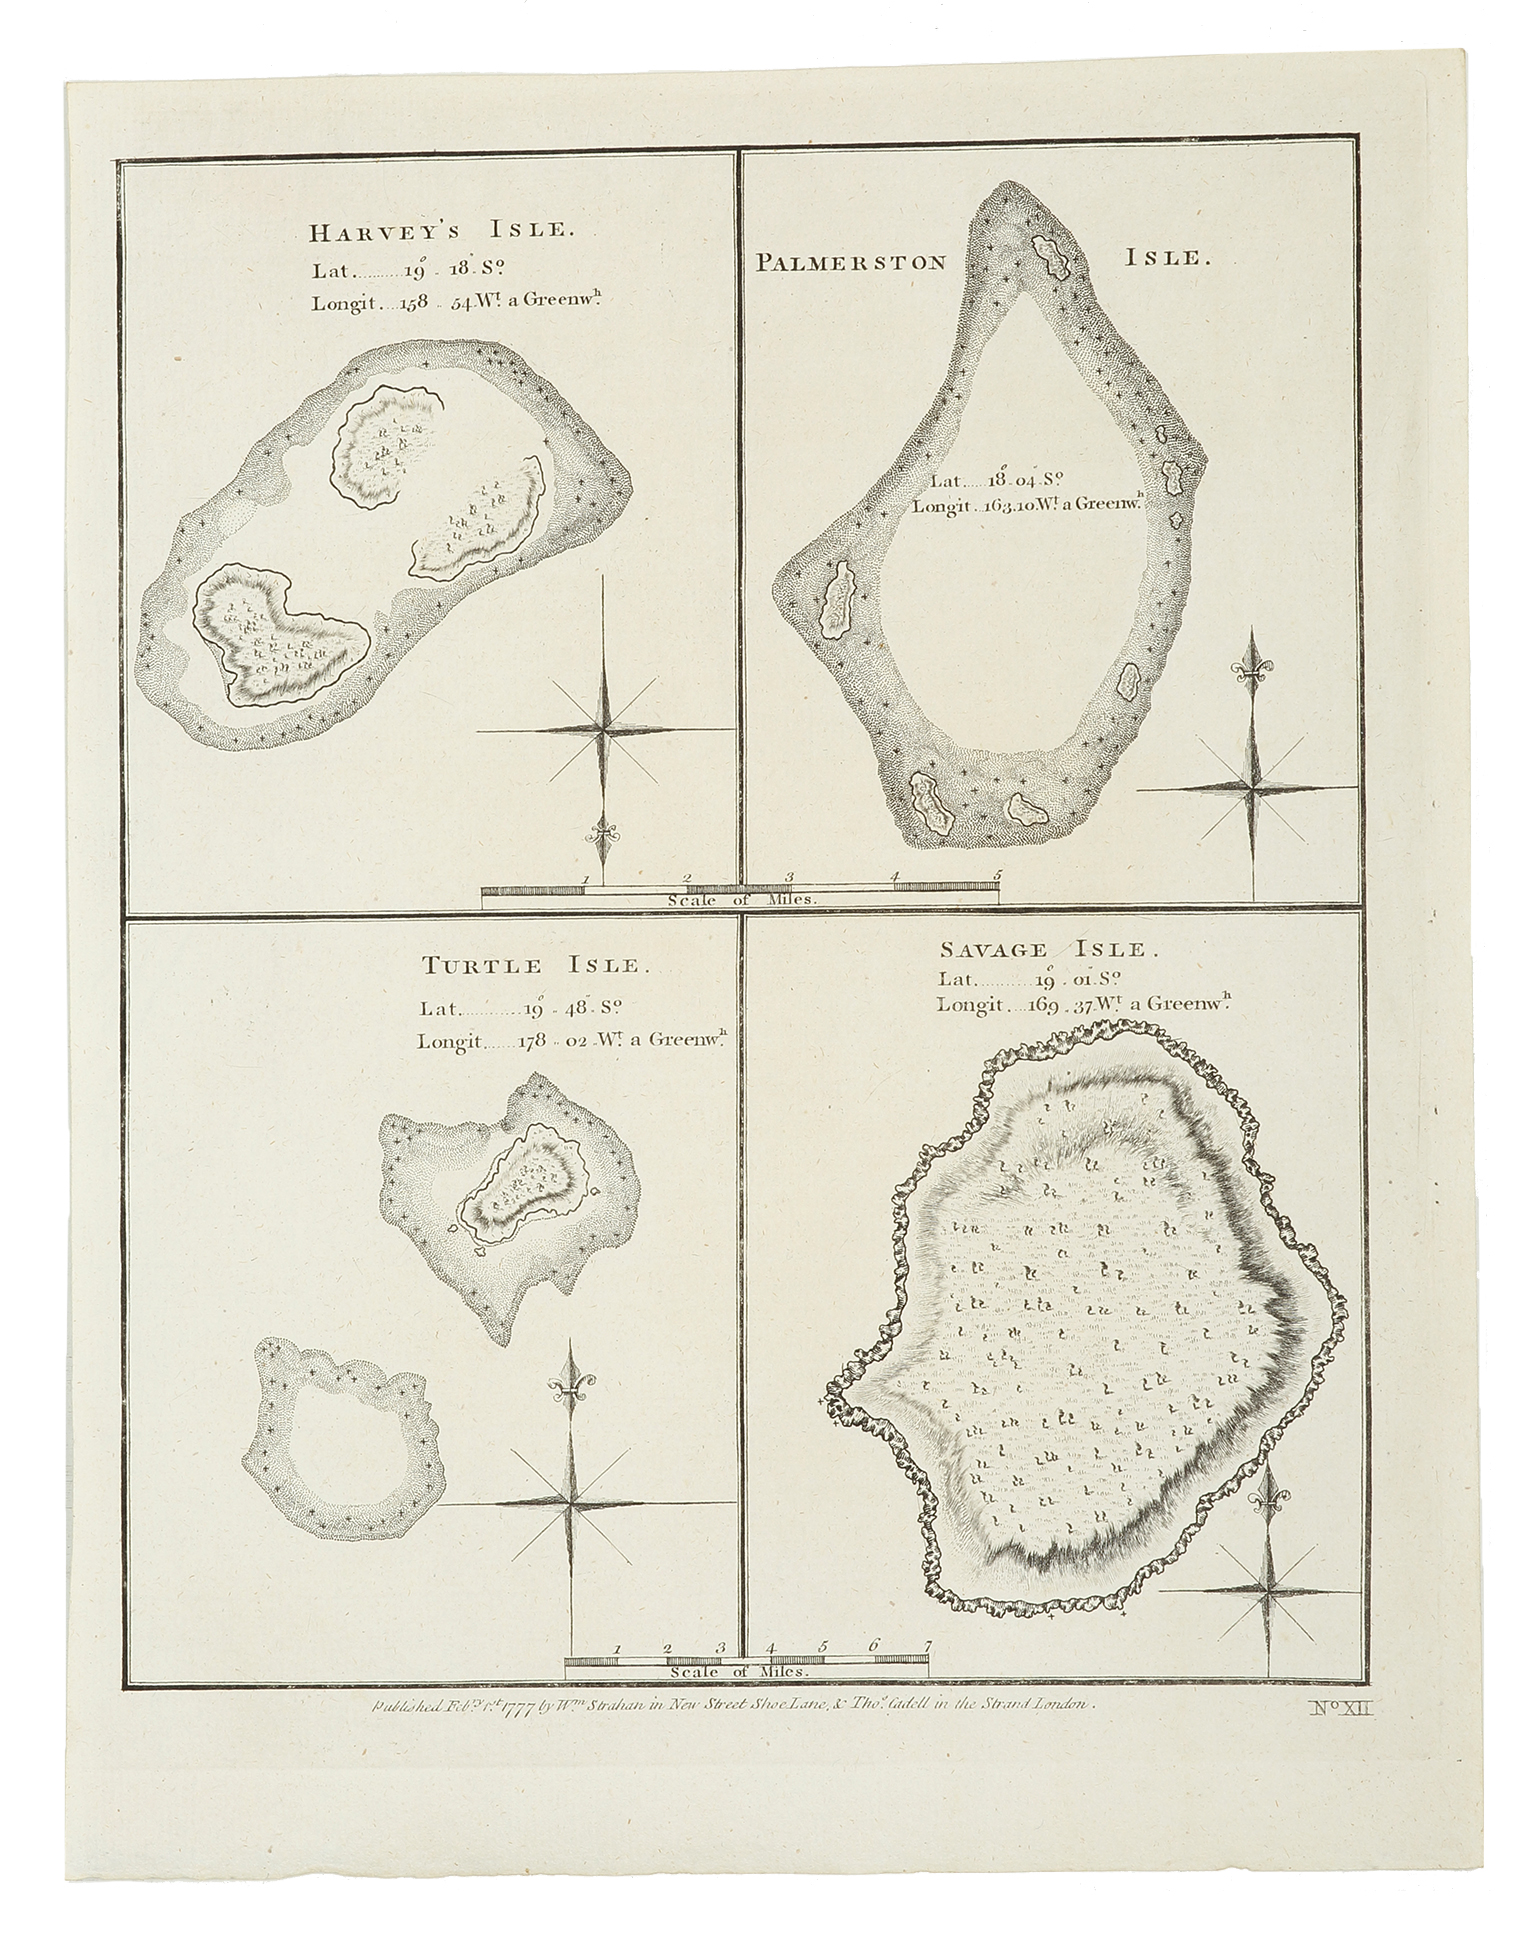 Harvey's Isle. Palmerston Isle. Turtle Isle. Savage Isle. - Antique Map from 1777